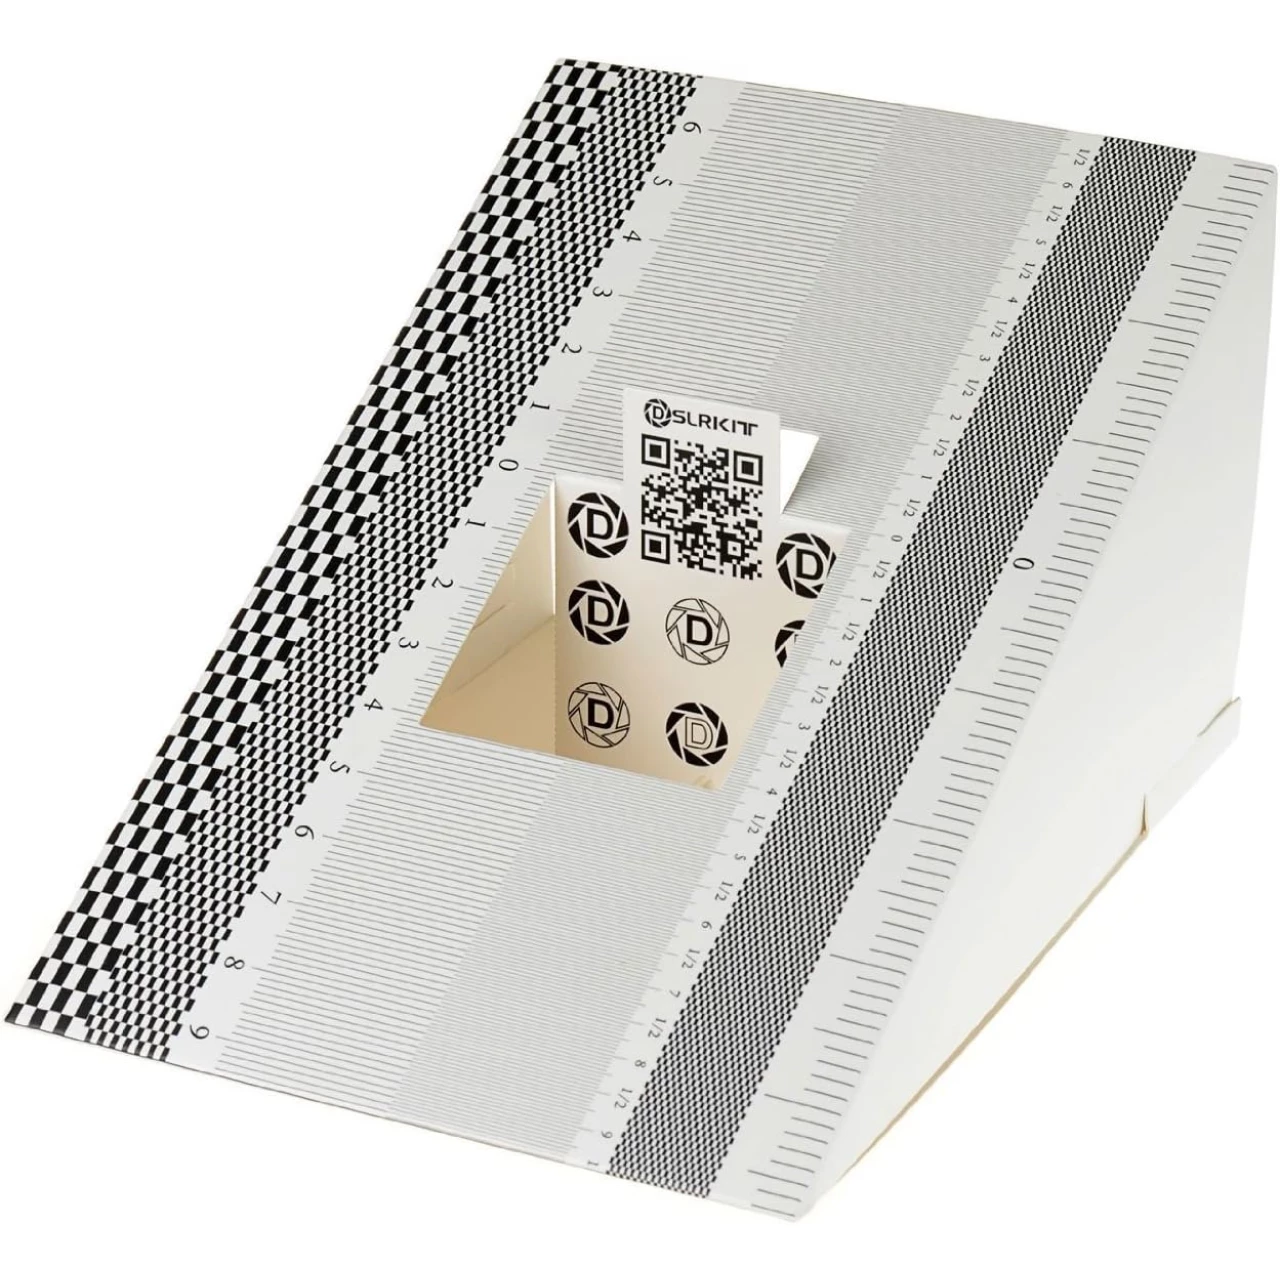 DSLRKIT Lens Focus Calibration Tool Alignment Ruler Folding Card(Pack of 2)